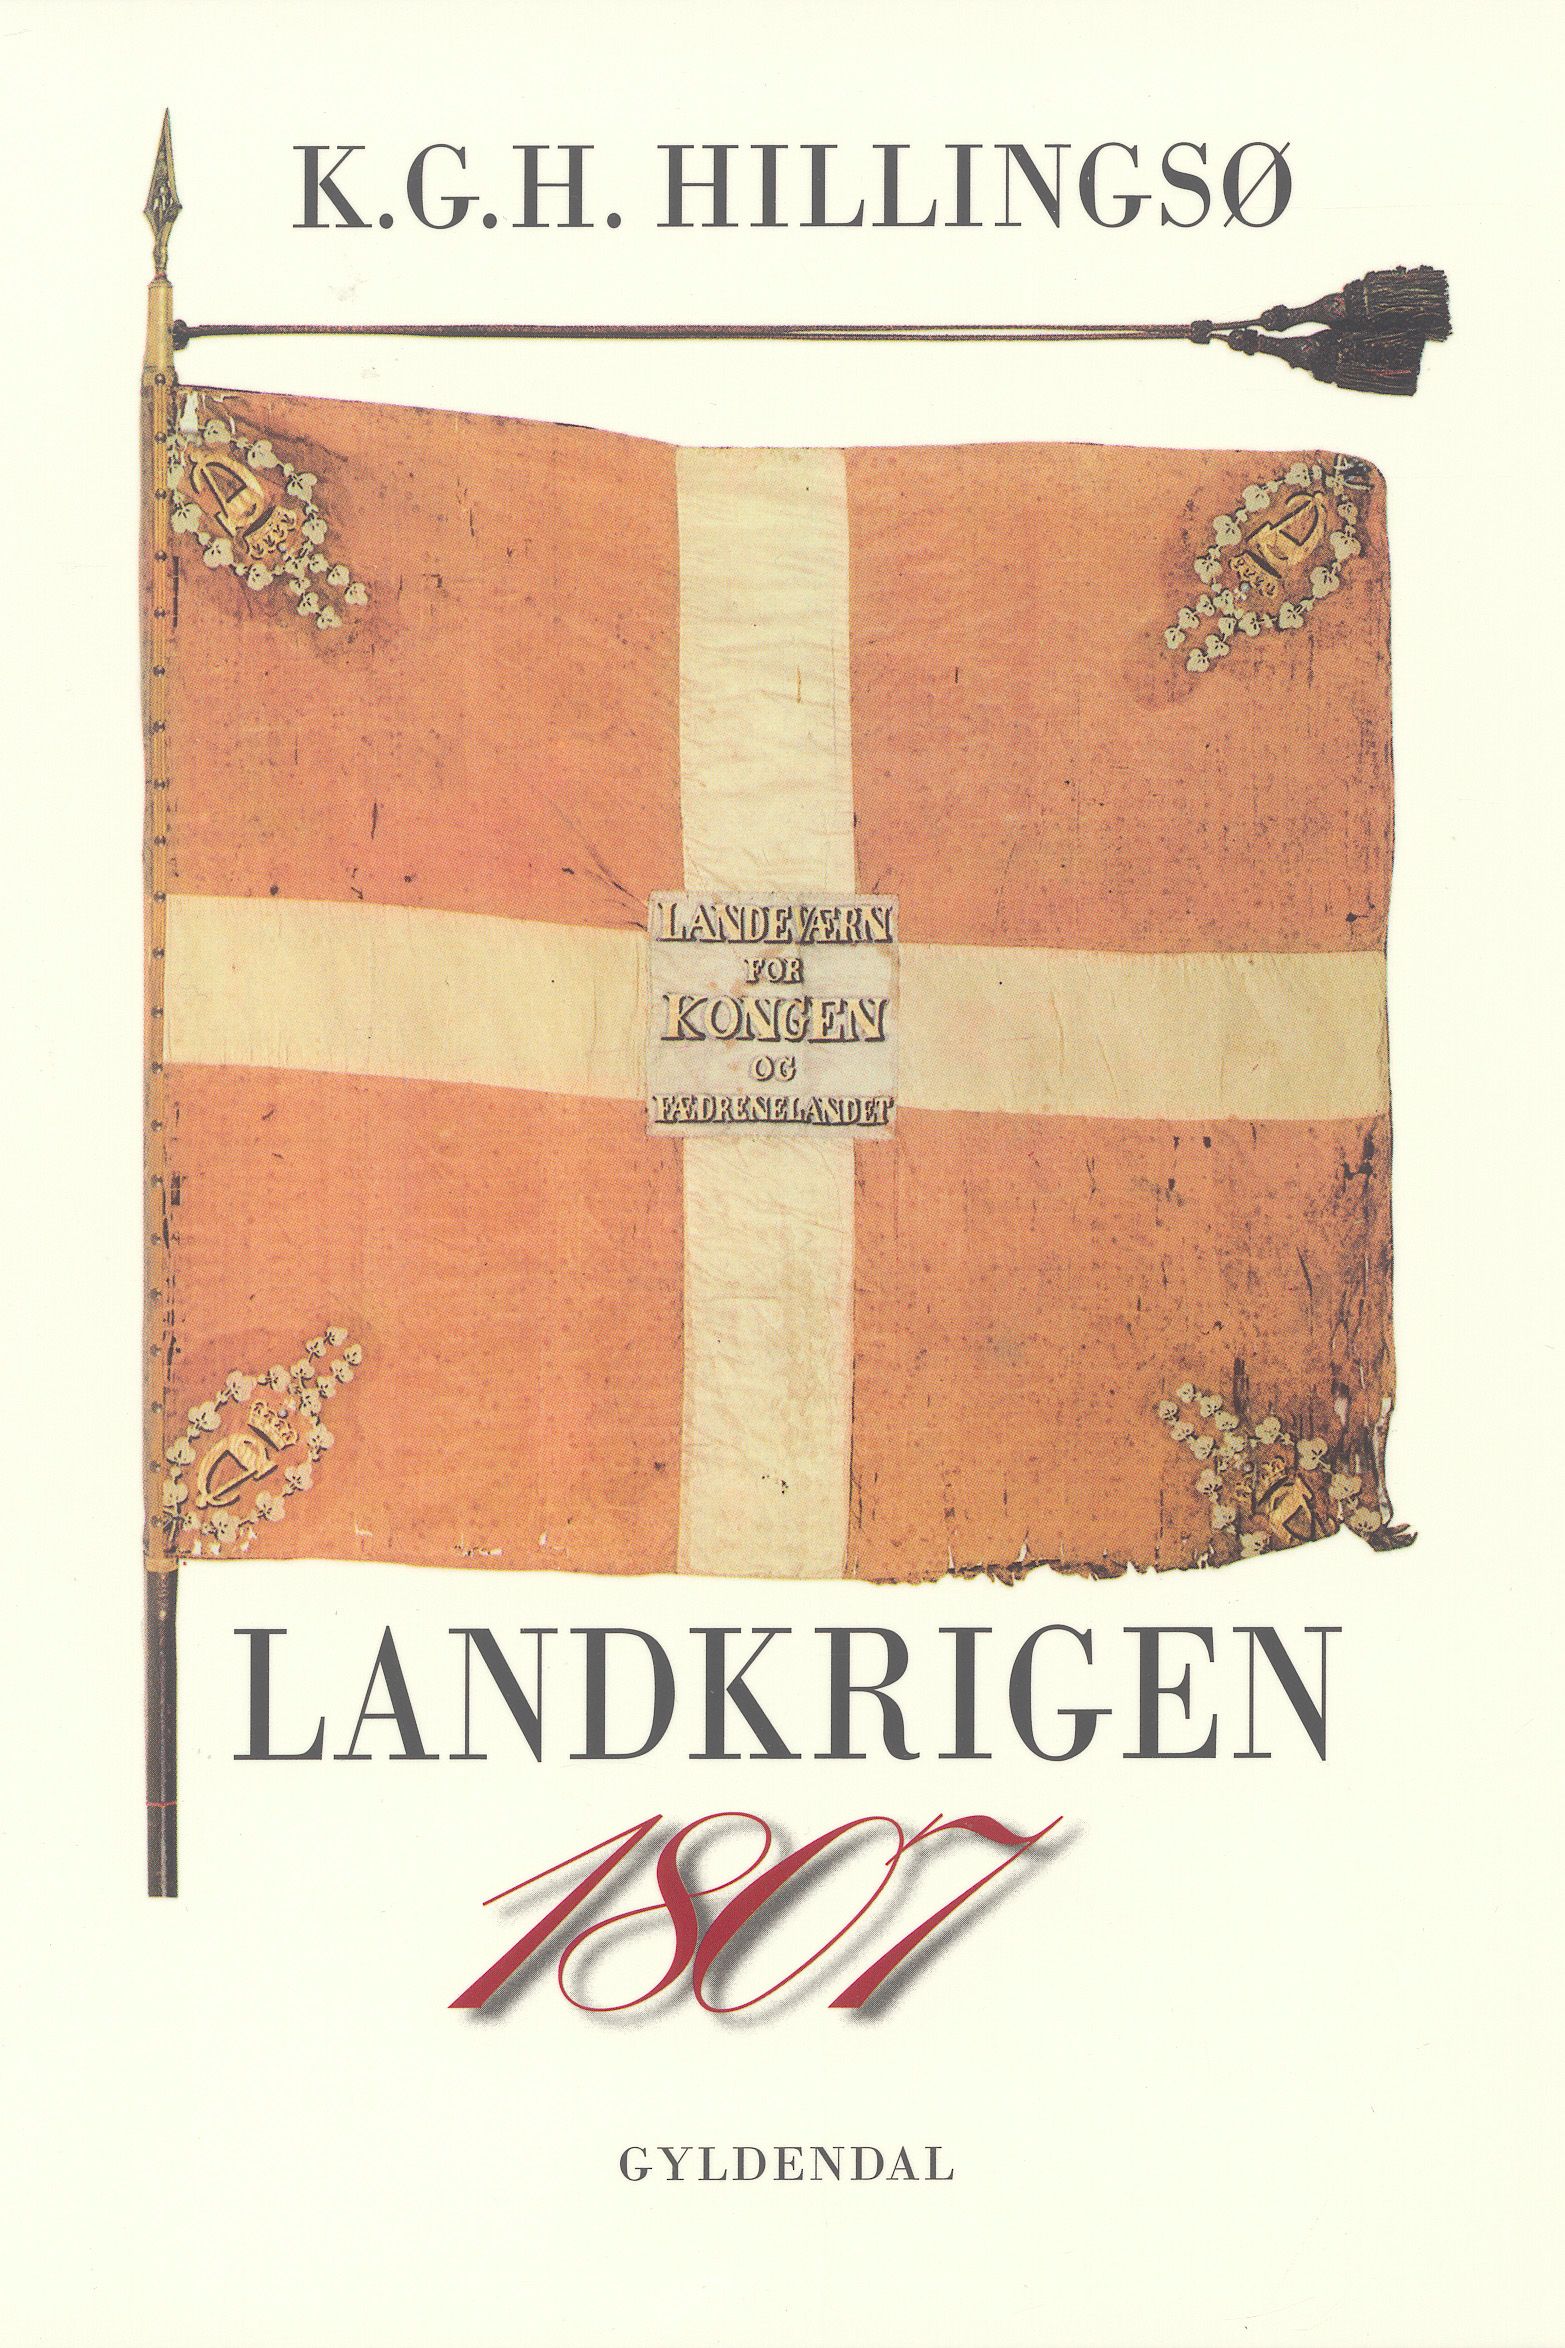 1807 Landkrigen, eBook by Kjeld Hillingsø